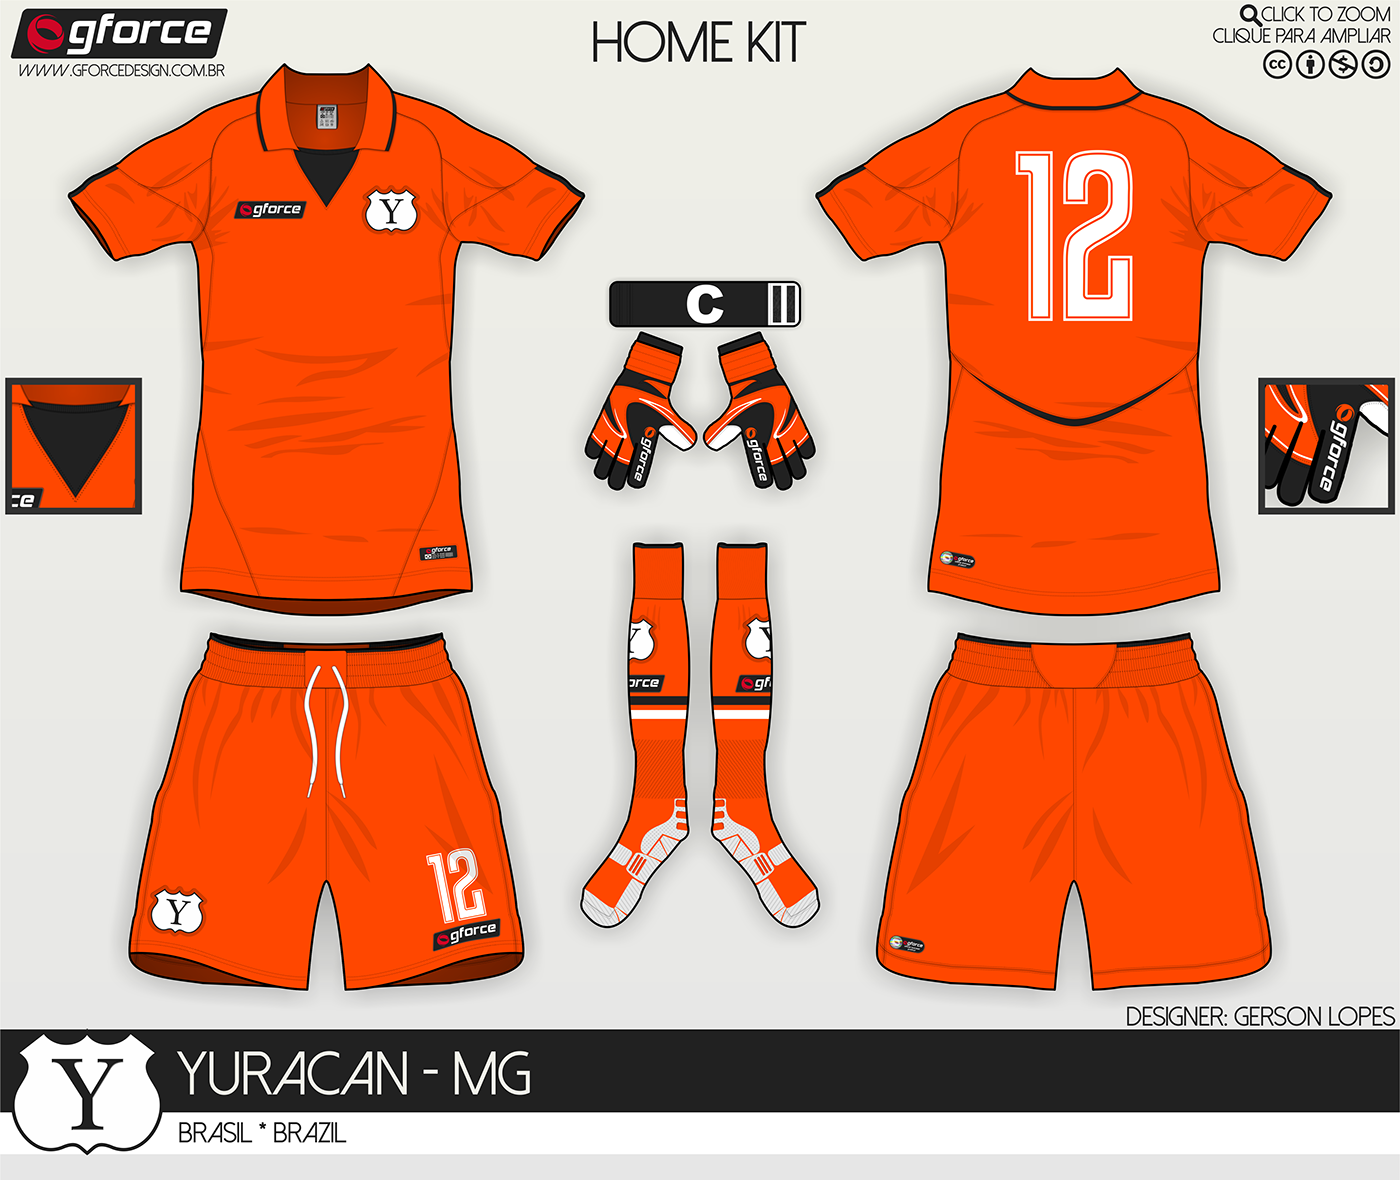 SportsDesign Mockup federação jersey kit soccer football redesign Rebrand design gforce crest YURACAN